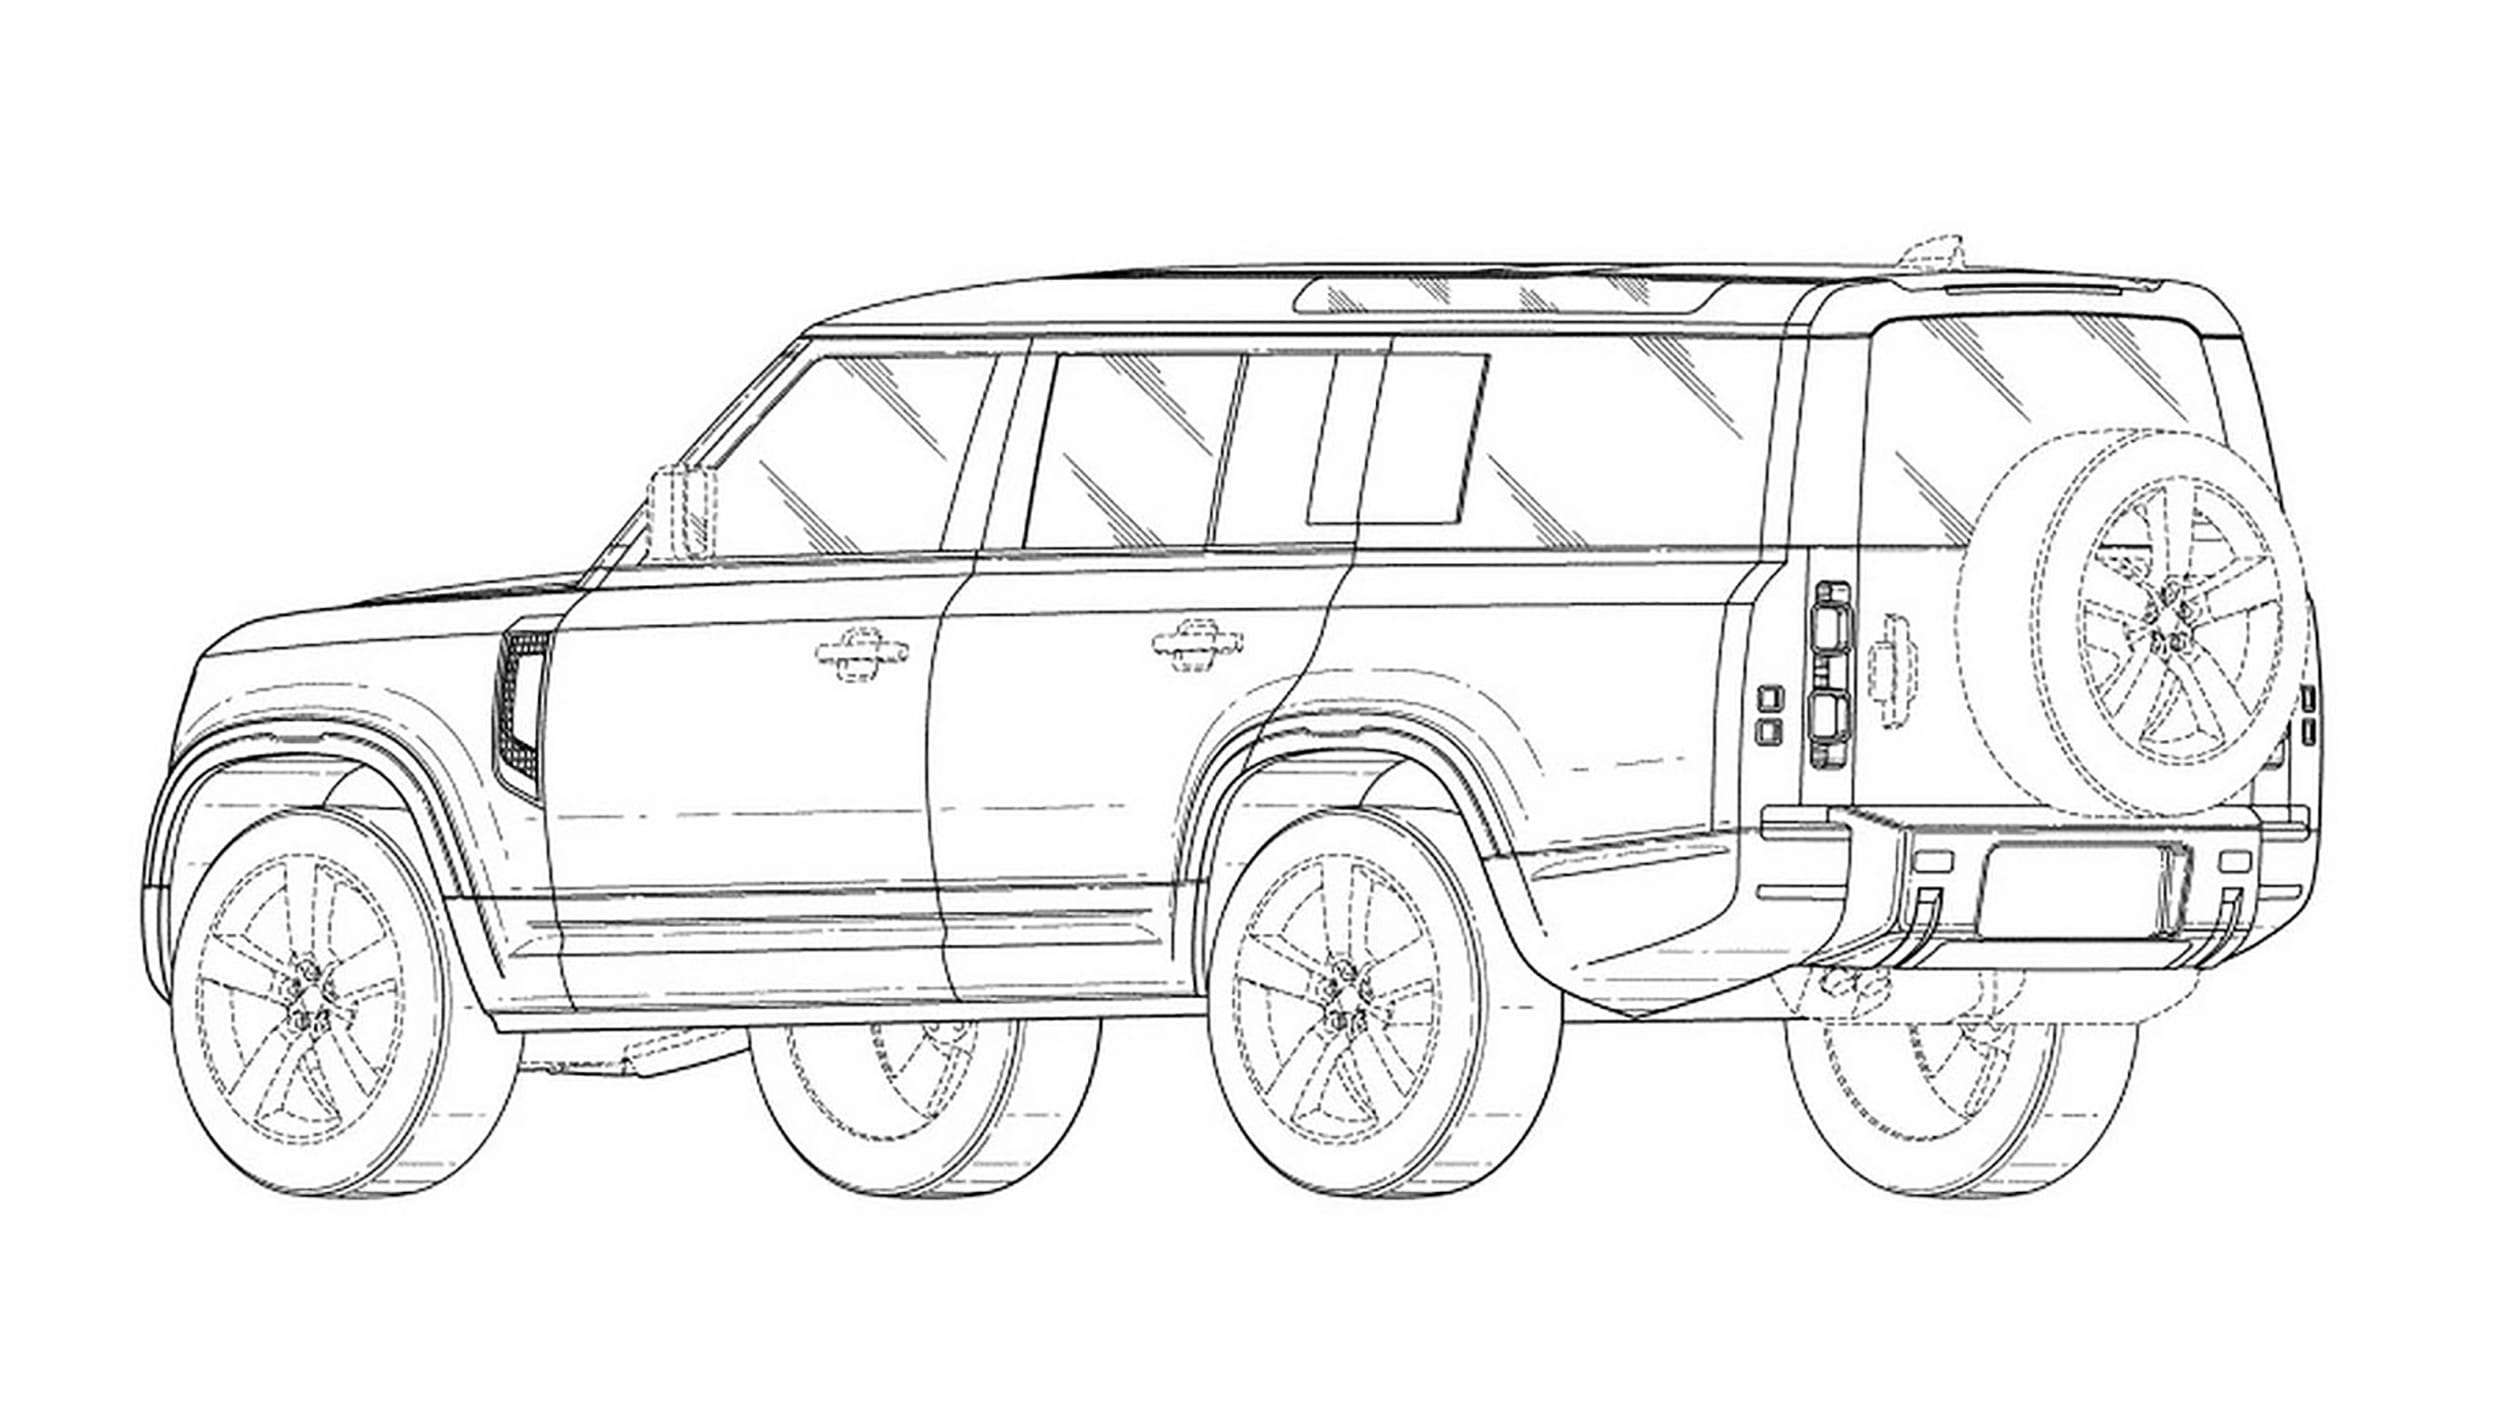 Land Rover Defender - rear